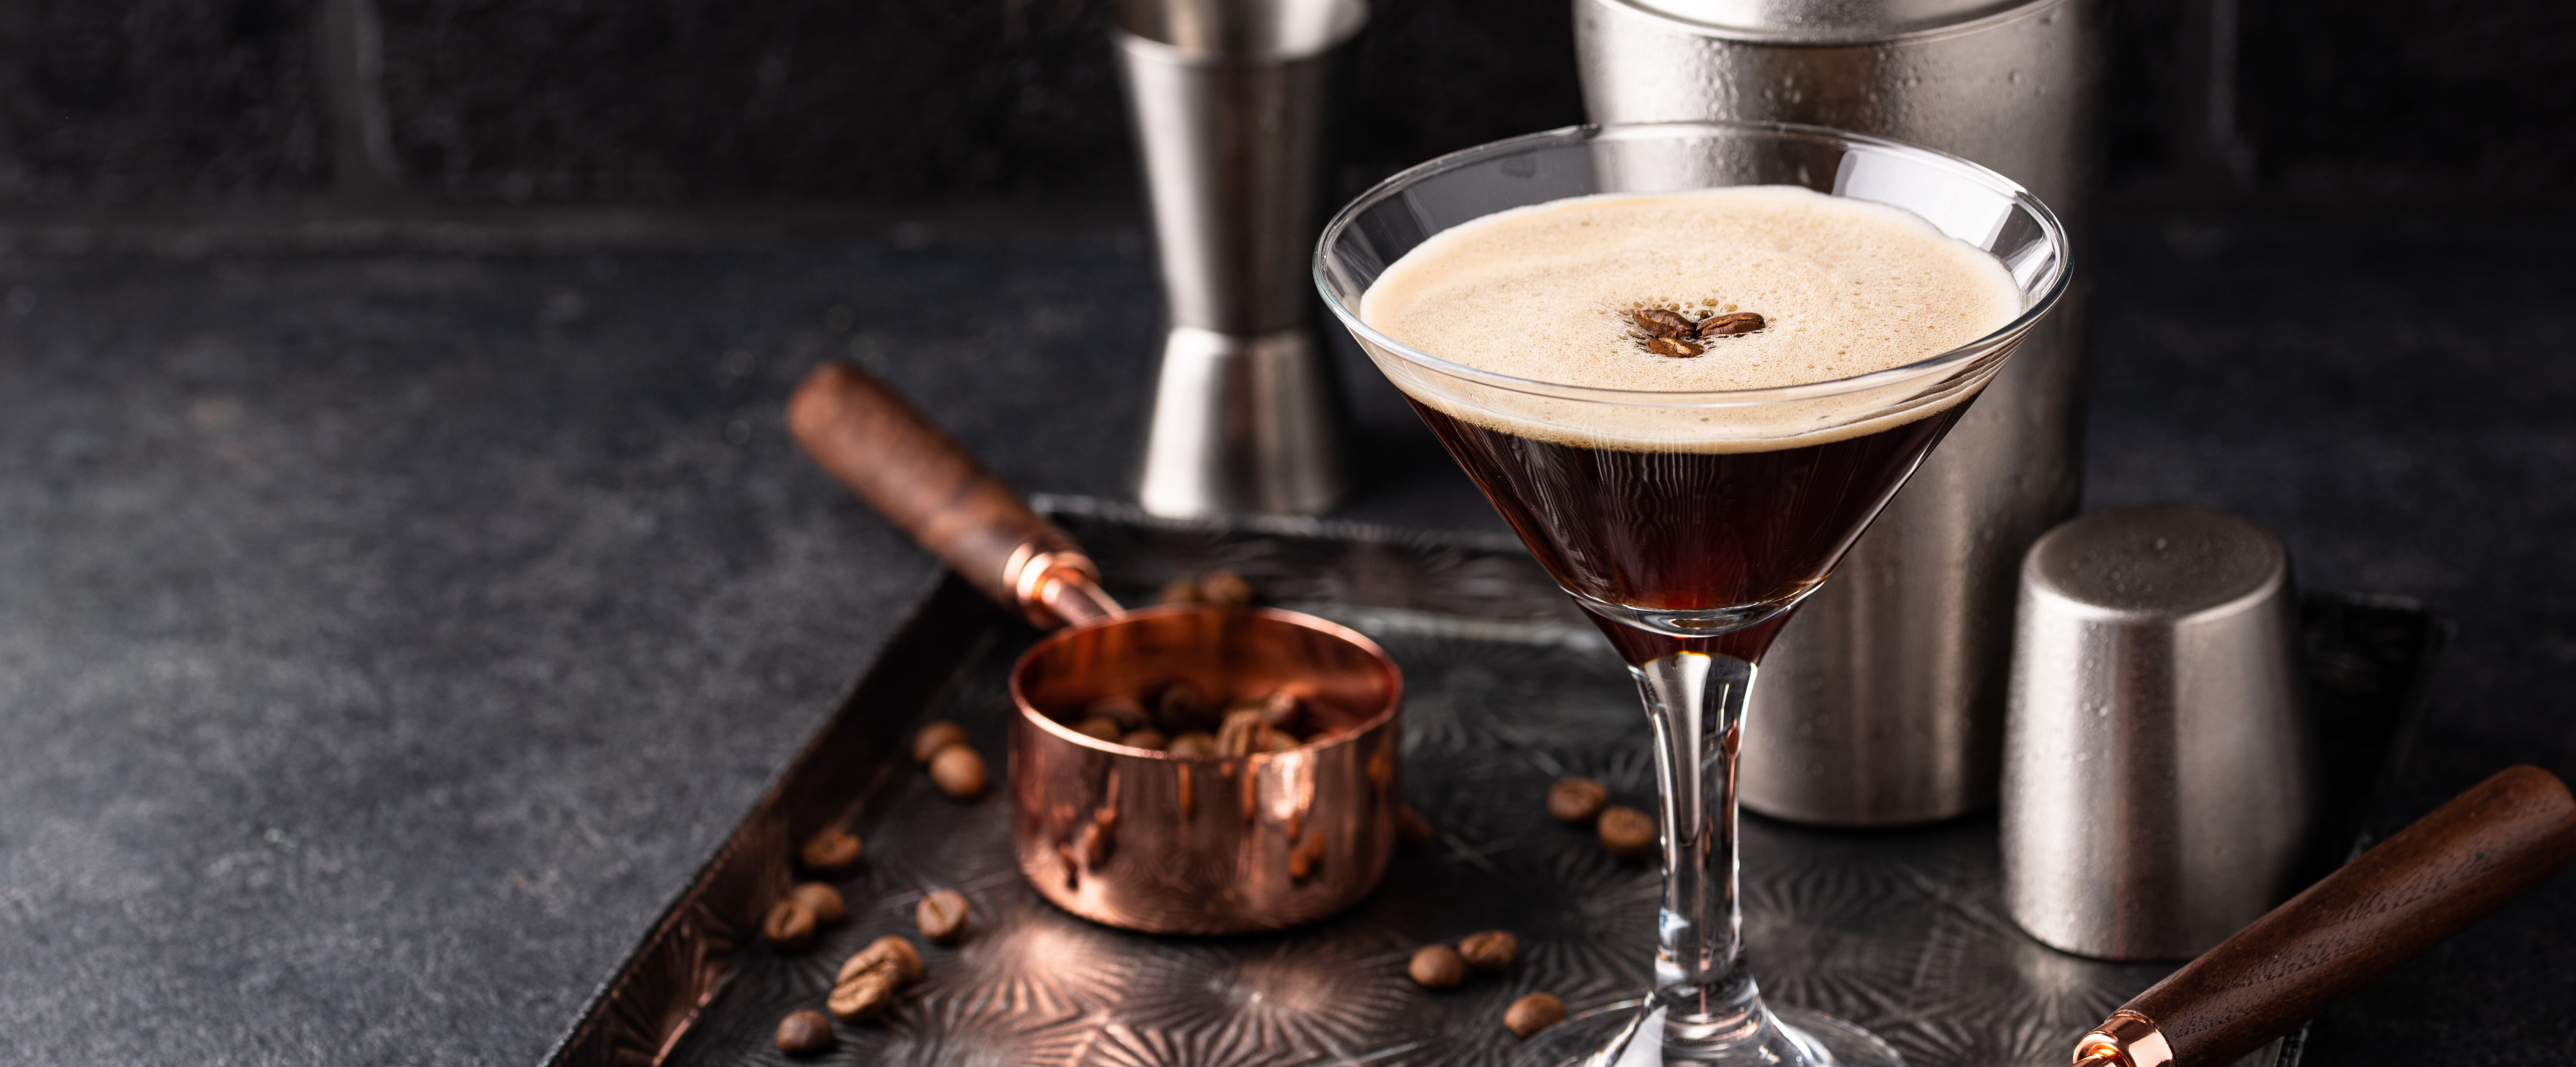 https://www.bourbonbanter.com/content/images/wp-content/uploads/2022/03/espresso-martini-cocktails-with-coffee-beans-2021-09-24-00-54-27-utc-1.jpg